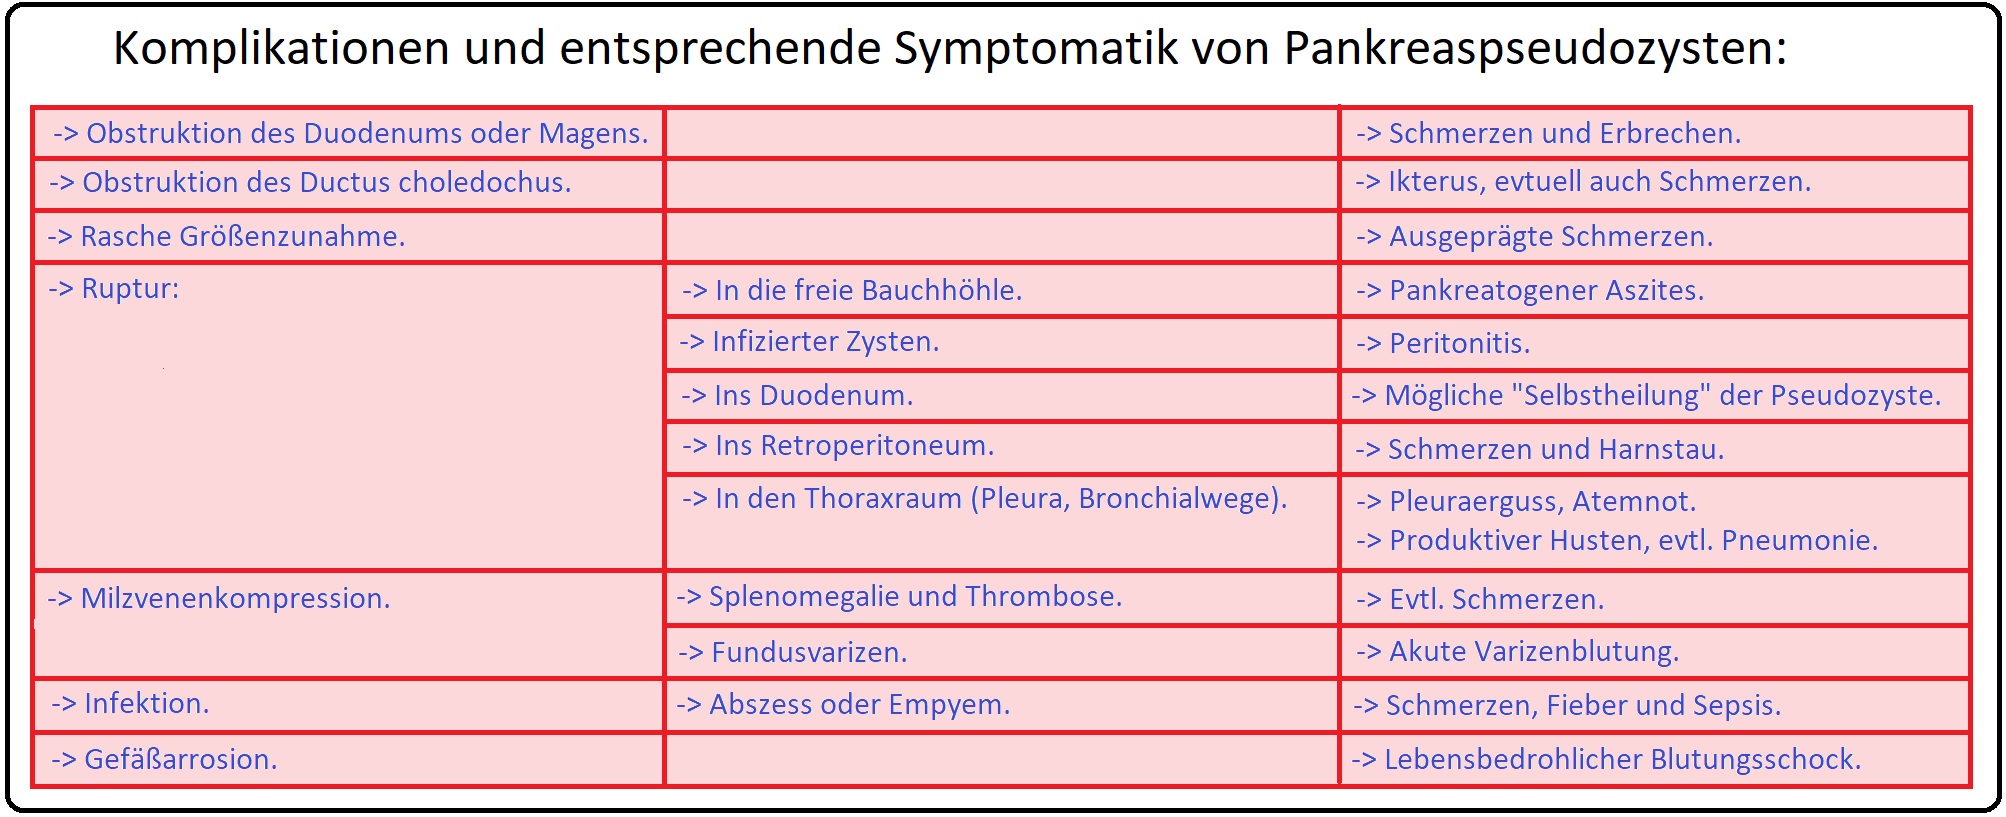 697 Koplikationen und entsprechende Symptomatik von Pankreaspseudozysten